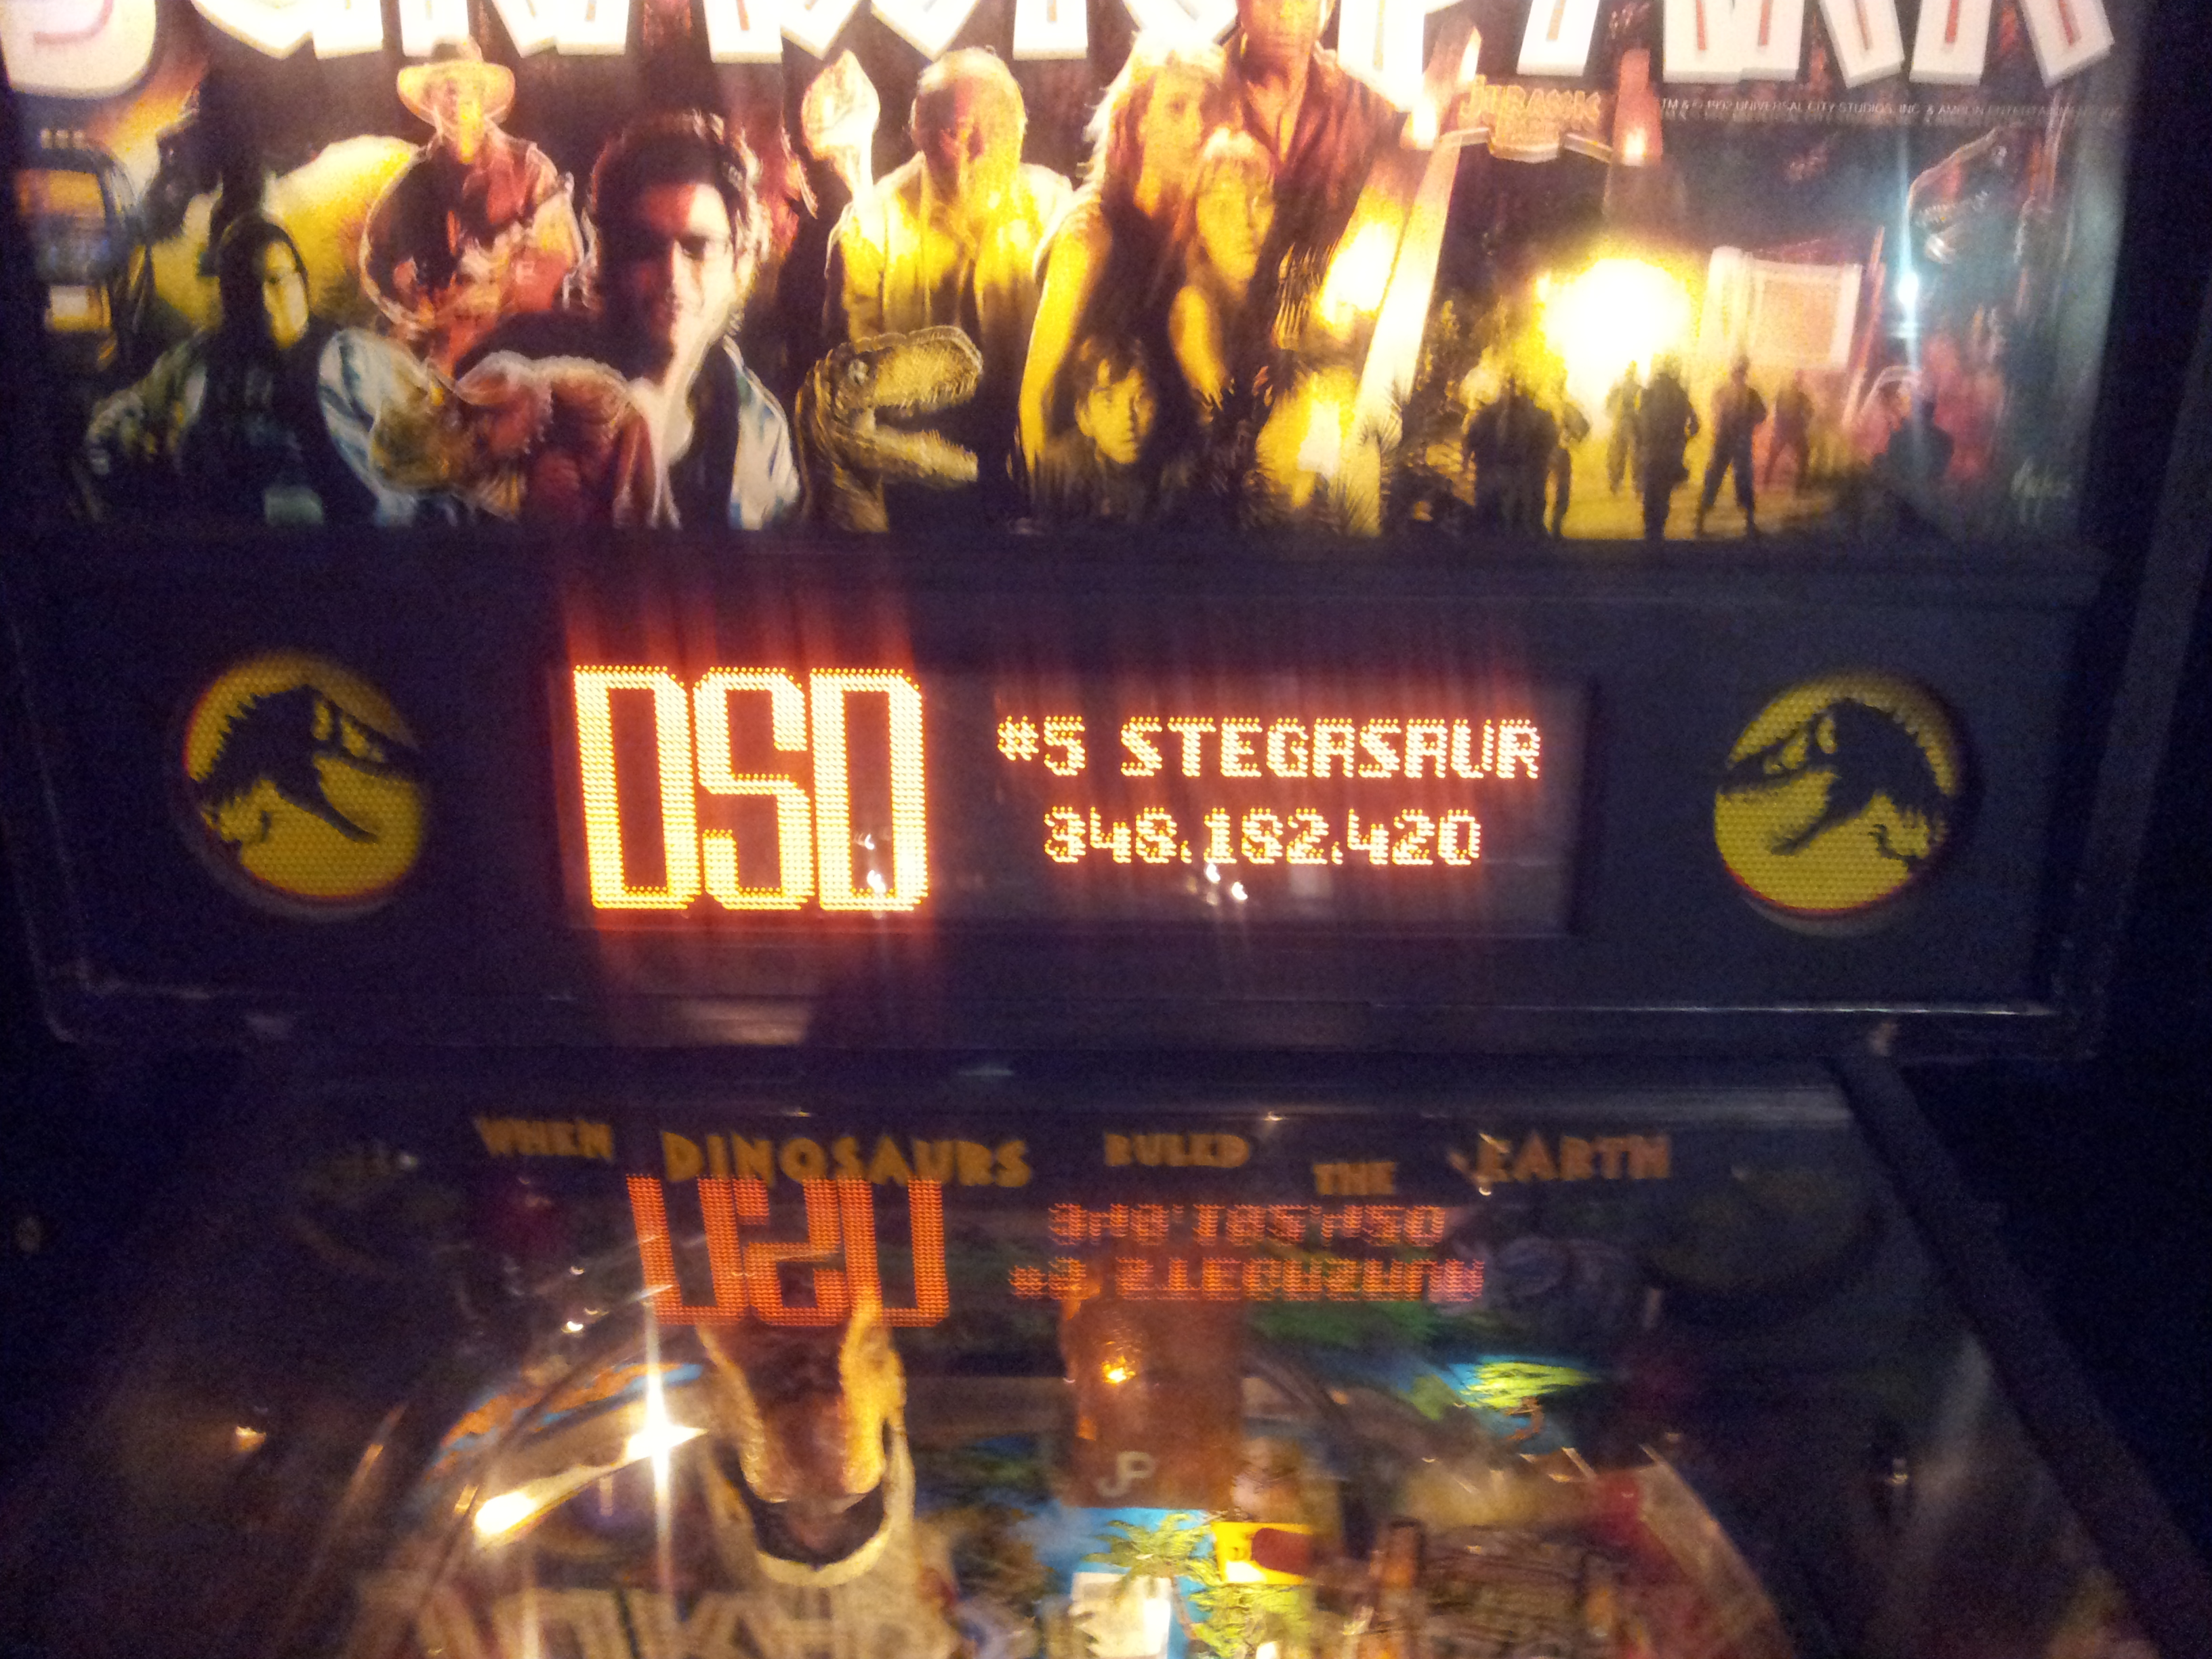 Jurassic Park 348,182,420 points